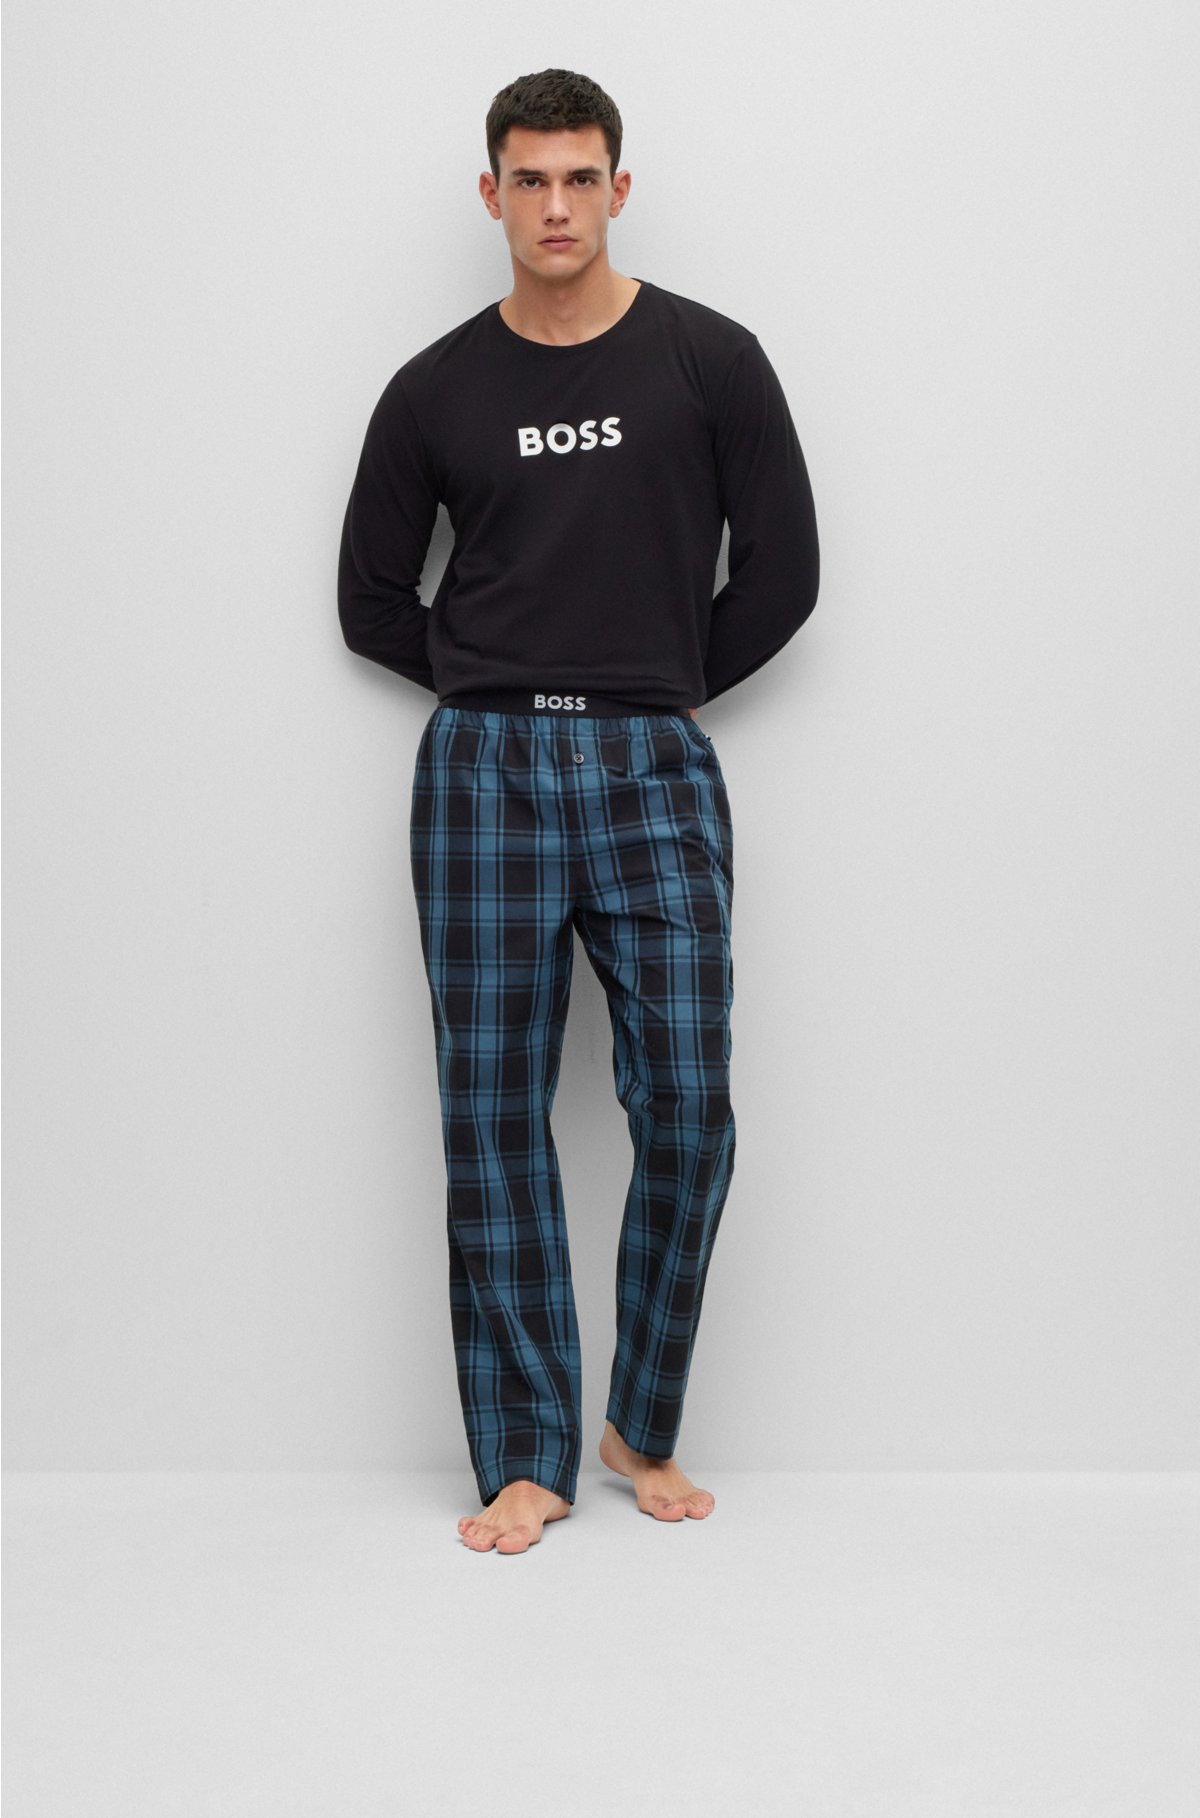 annuleren Archaïsch aluminium BOSS - Regular-fit pyjama met contrastlogo's